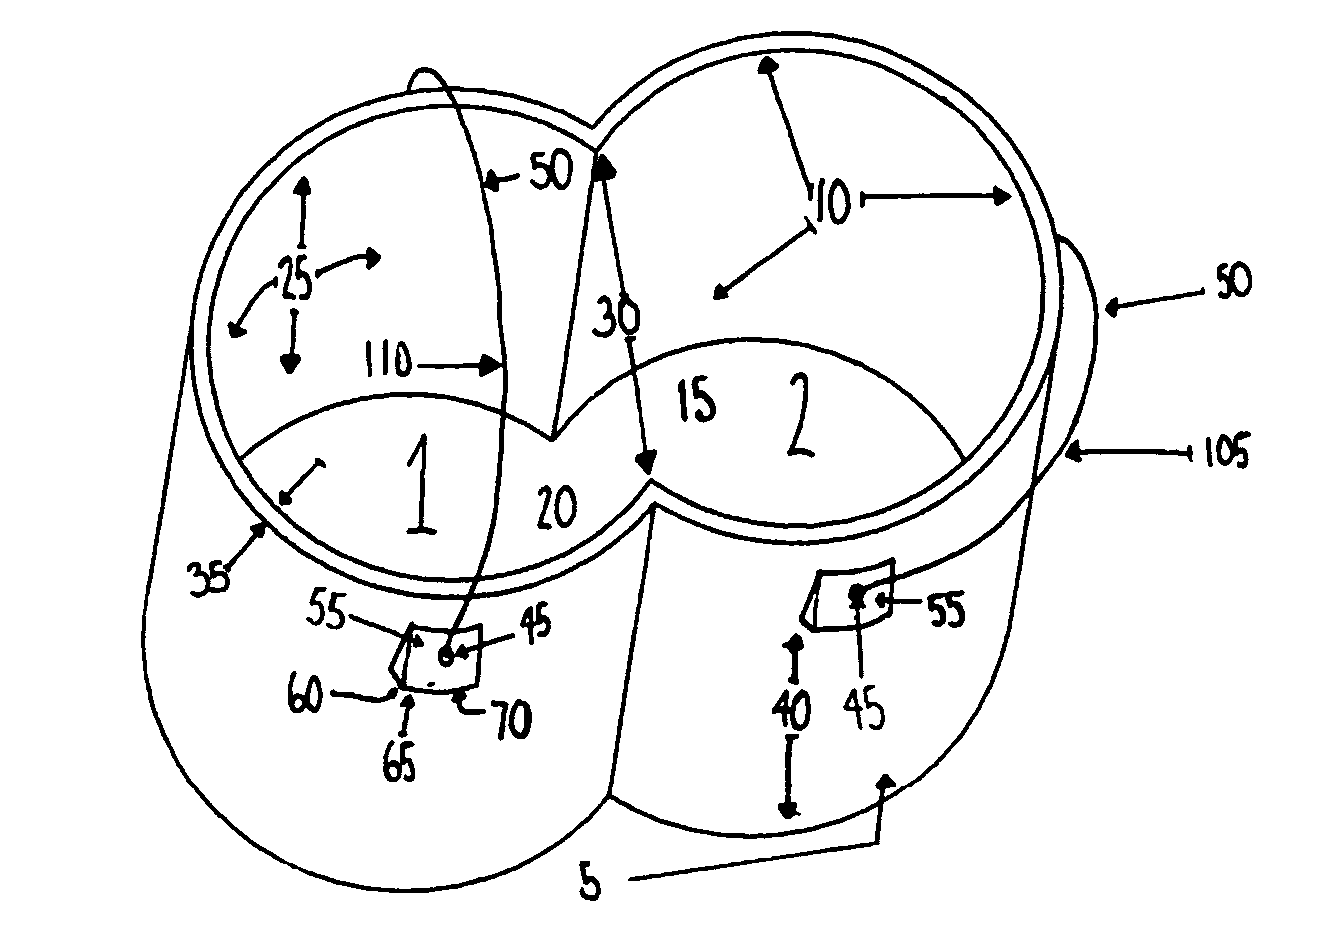 Multiple-use two-reservoir bucket